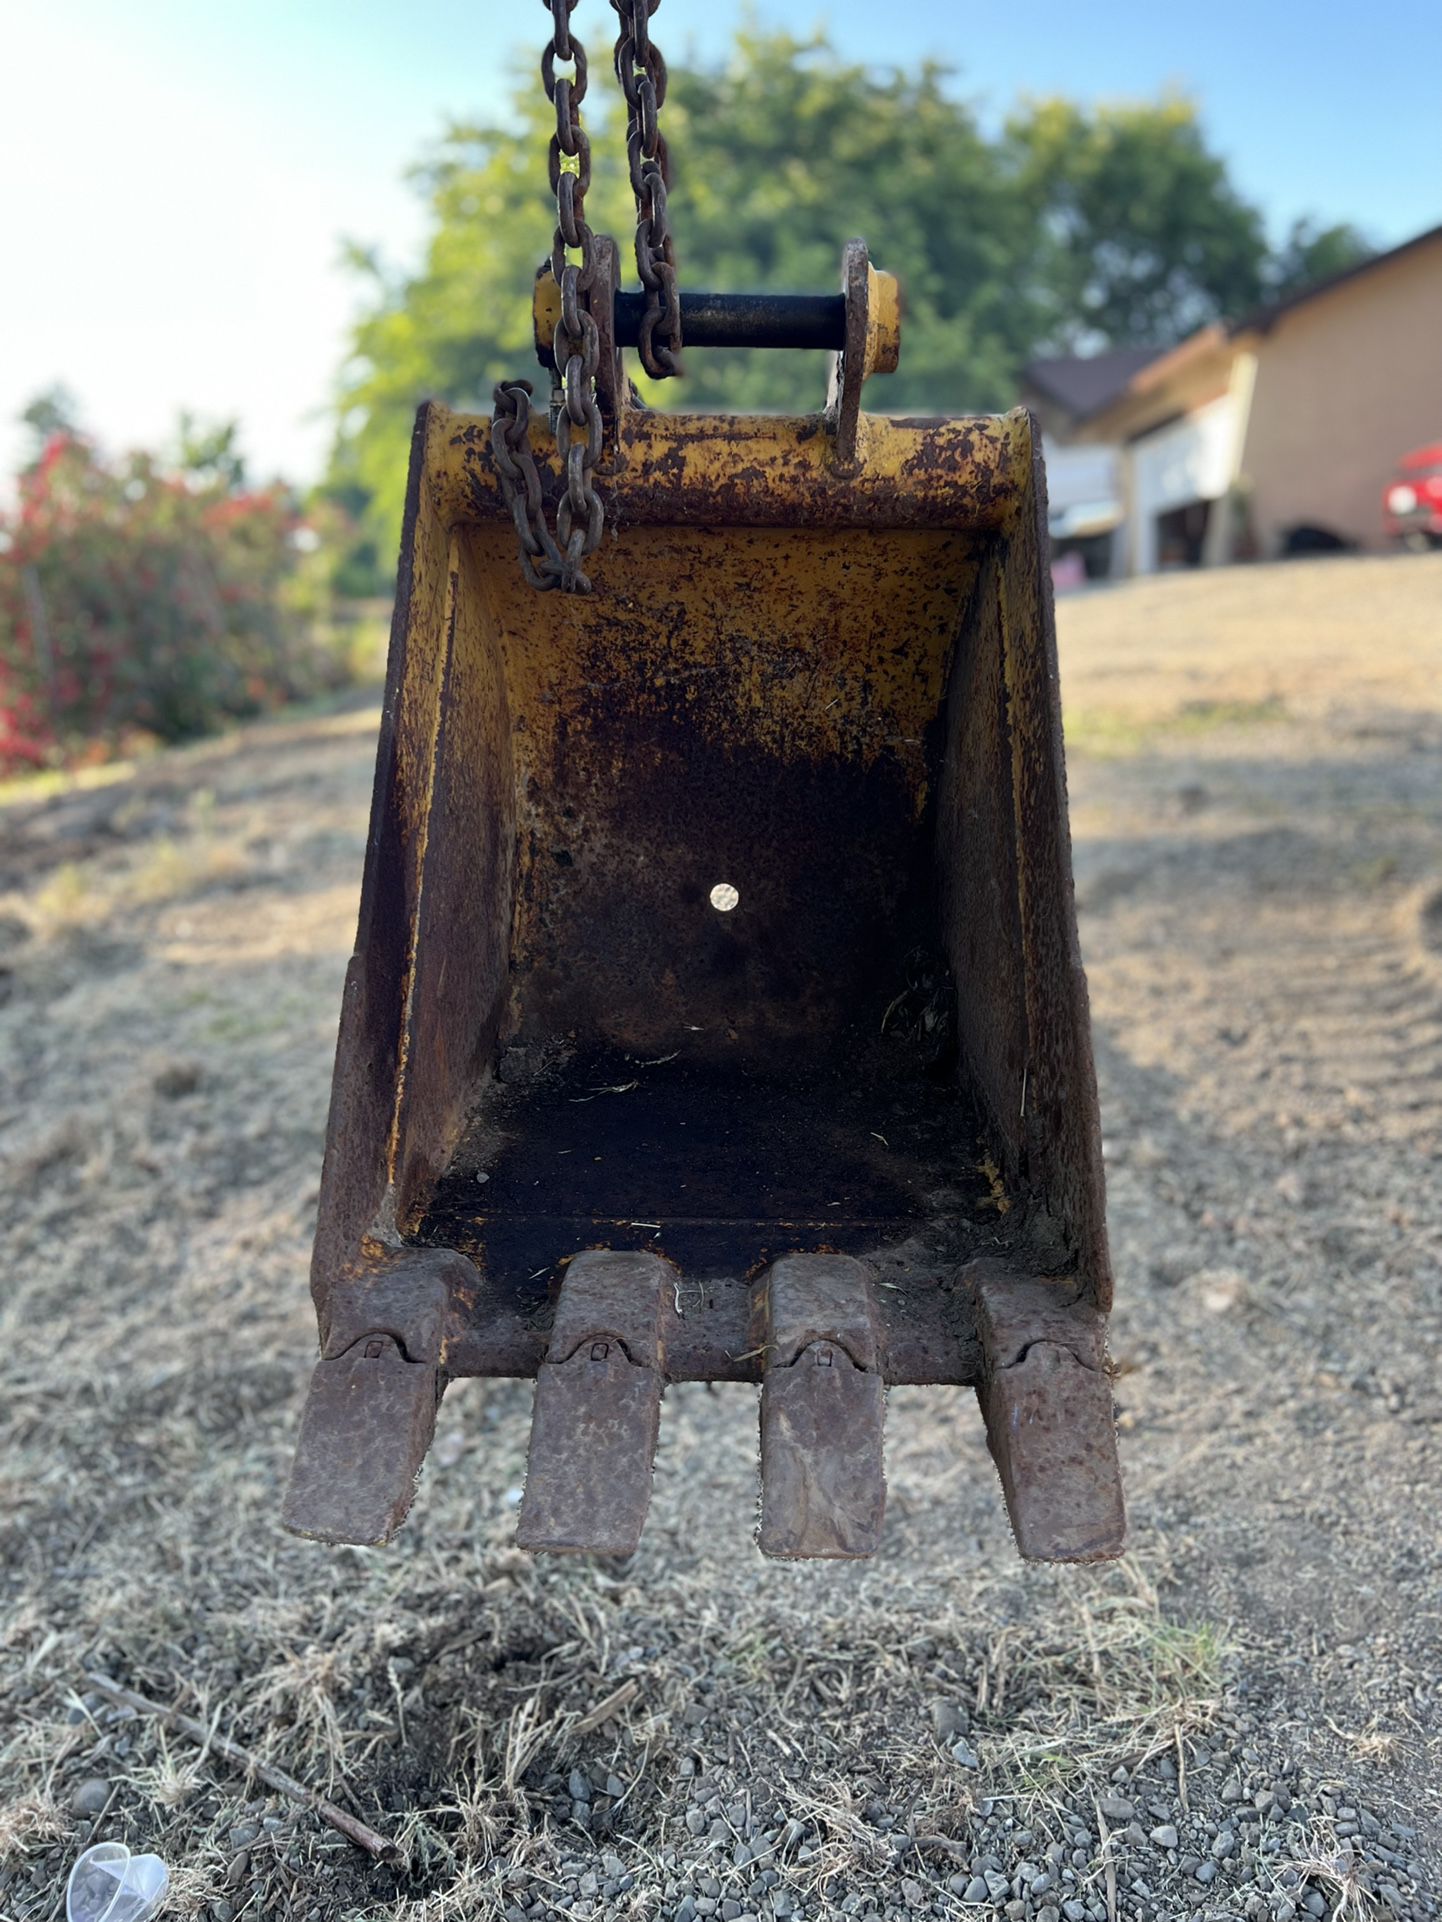 16” Mini Excavator Bucket